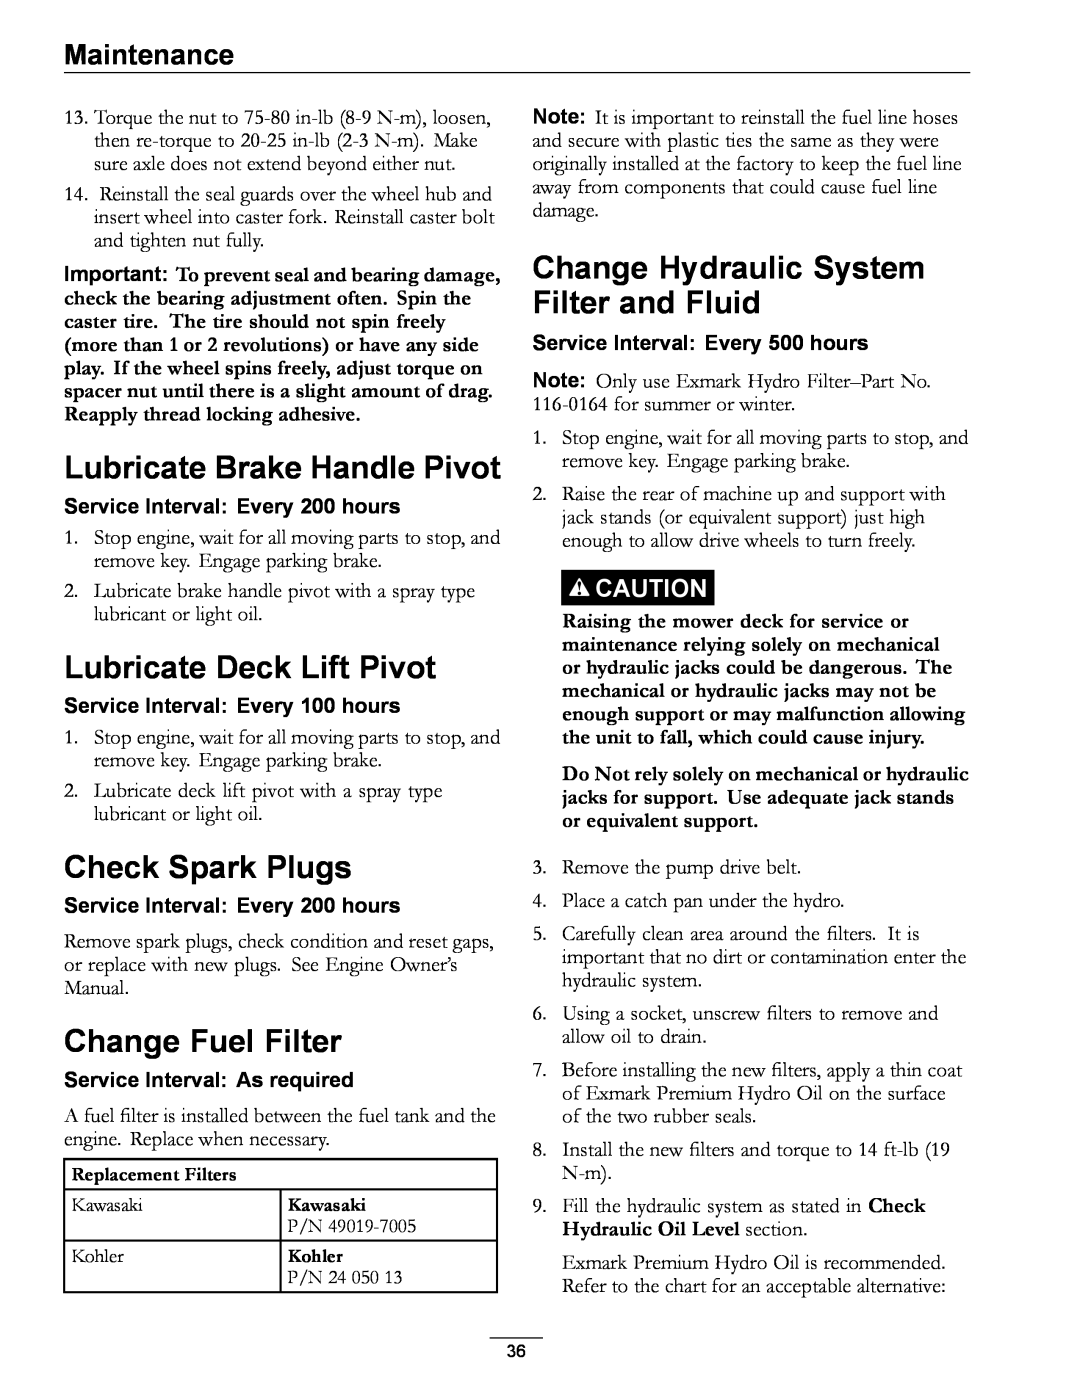 Exmark 4500-872 manual Lubricate Brake Handle Pivot, Lubricate Deck Lift Pivot, Check Spark Plugs, Change Fuel Filter 